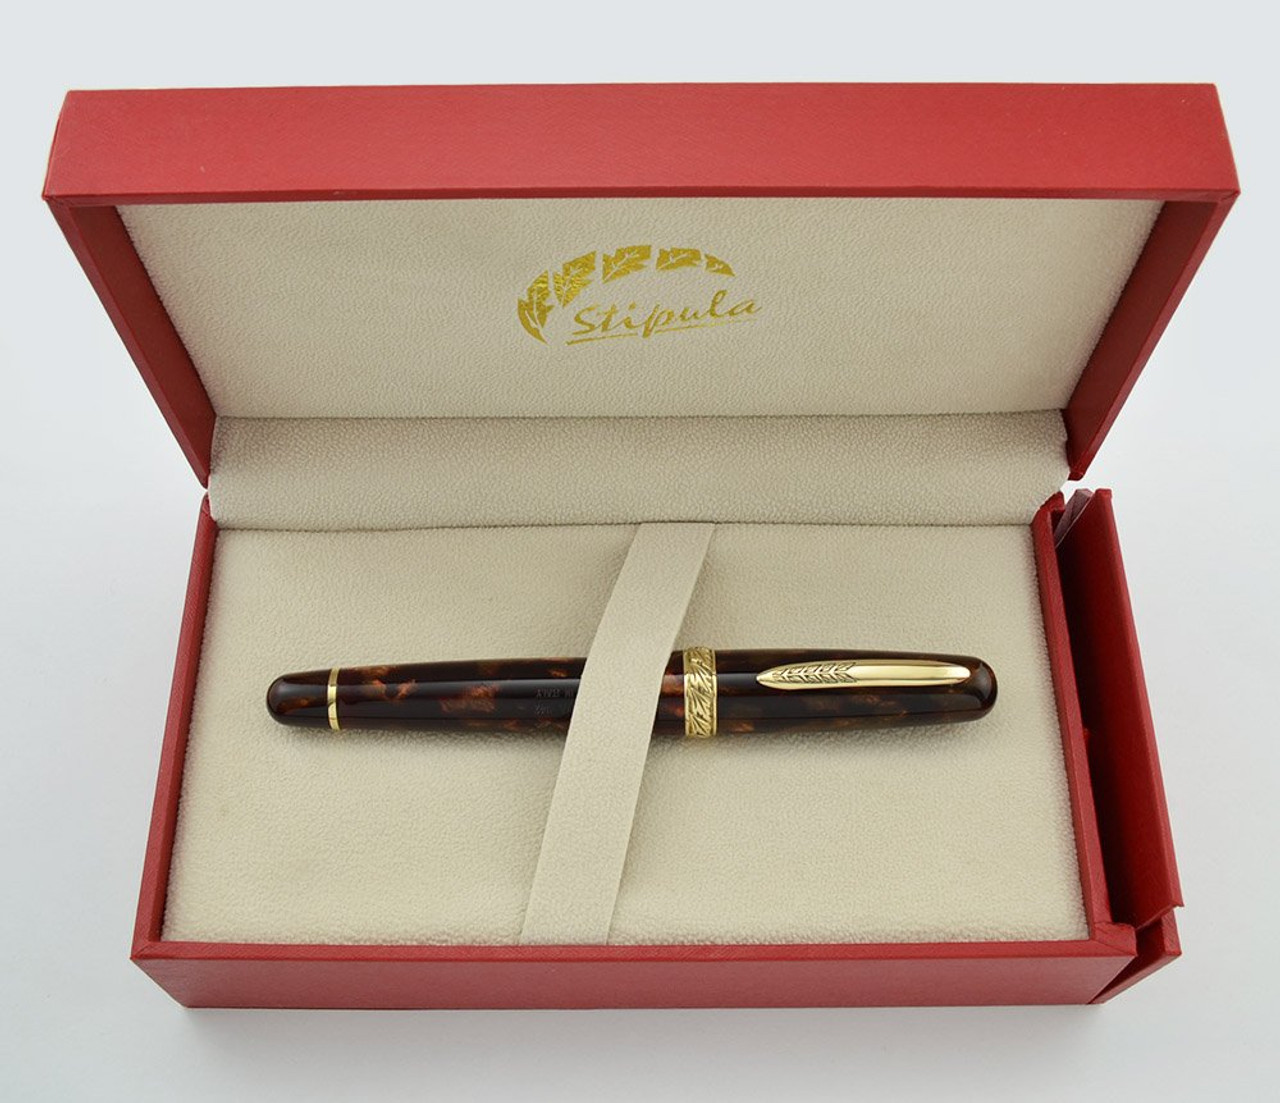 Stipula Etruria Fountain Pen - First Version, Amber Brown Cellulose Acetate, Piston Fill, Fine 18k Nib (Near Mint, In Box)